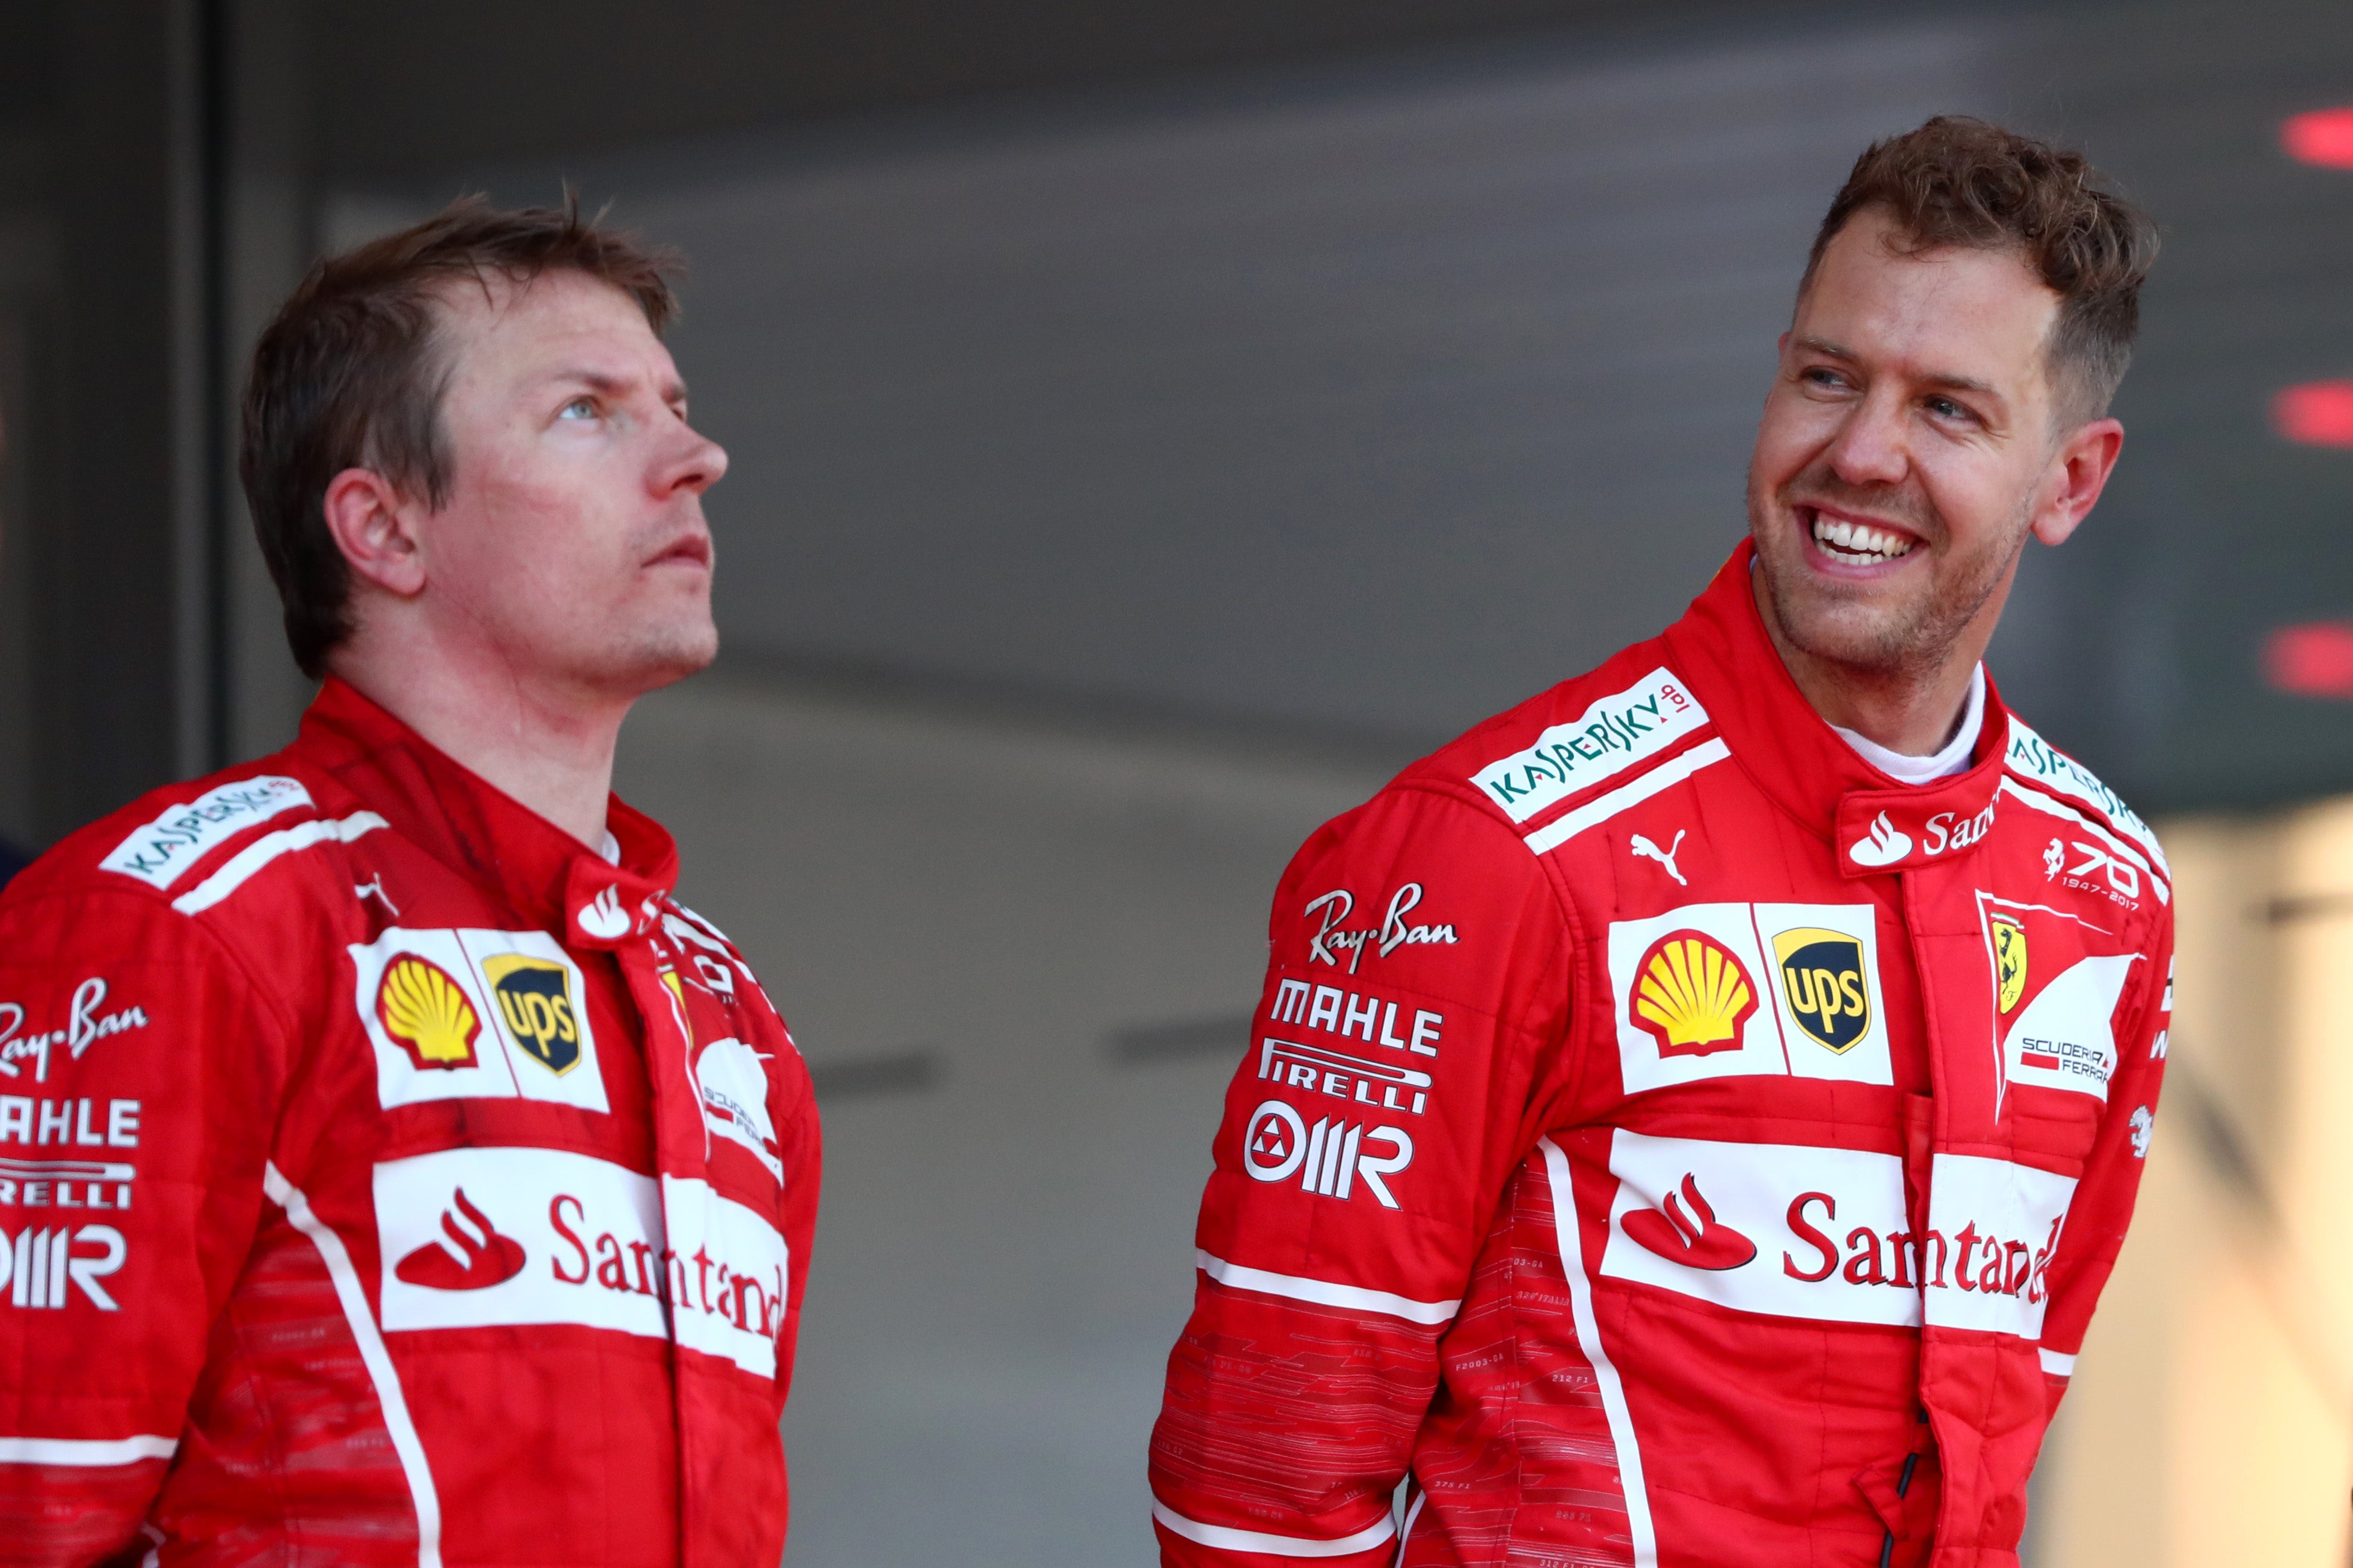 Kimi Raikkonen and Sebastian Vettel were Ferrari teammates